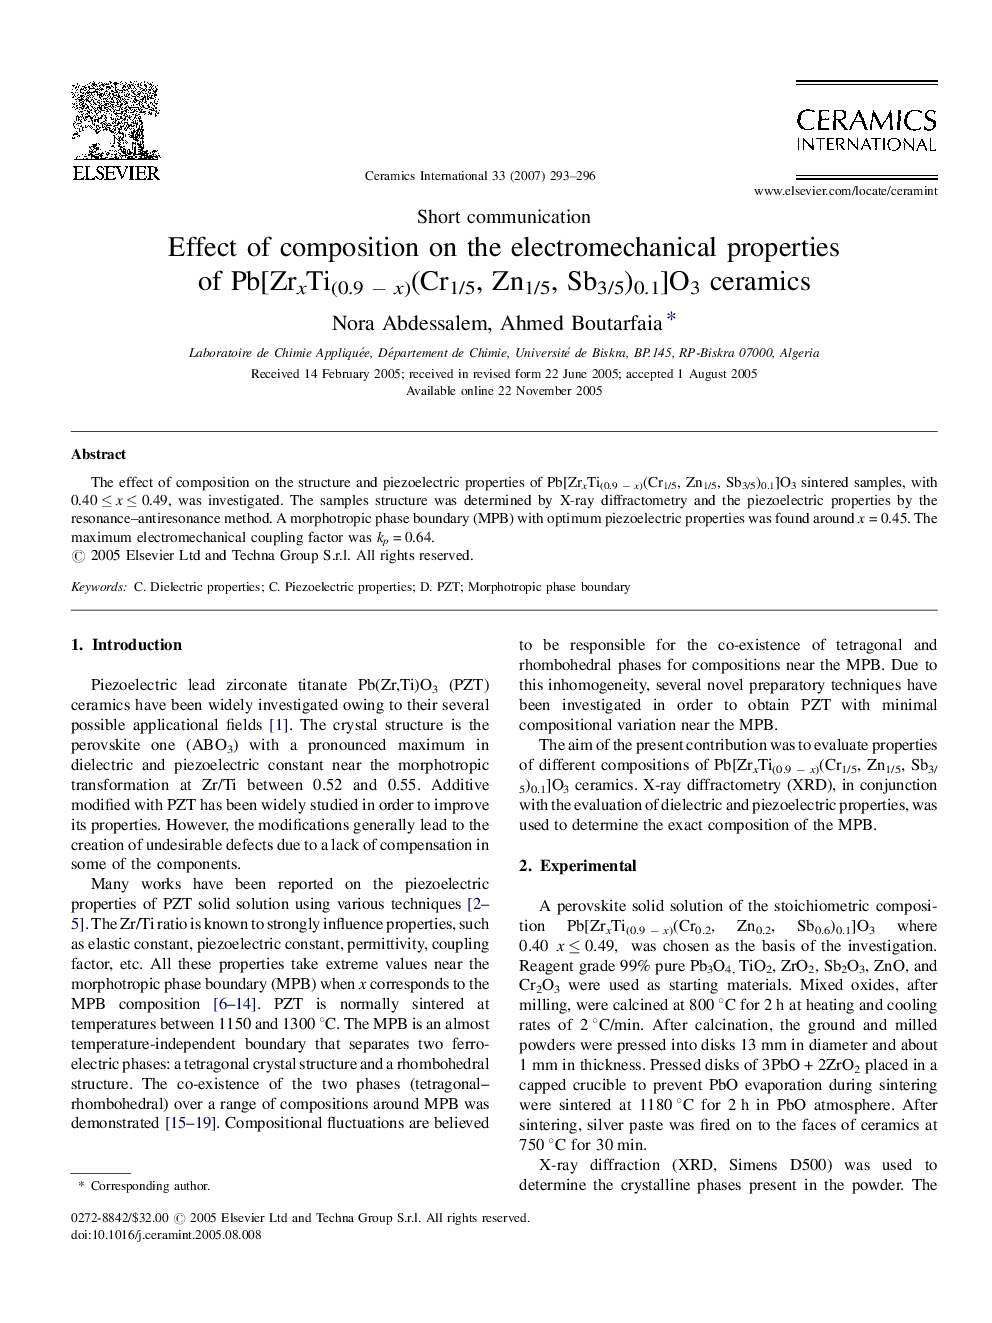 Effect of composition on the electromechanical properties of Pb[ZrxTi(0.9 − x)(Cr1/5, Zn1/5, Sb3/5)0.1]O3 ceramics